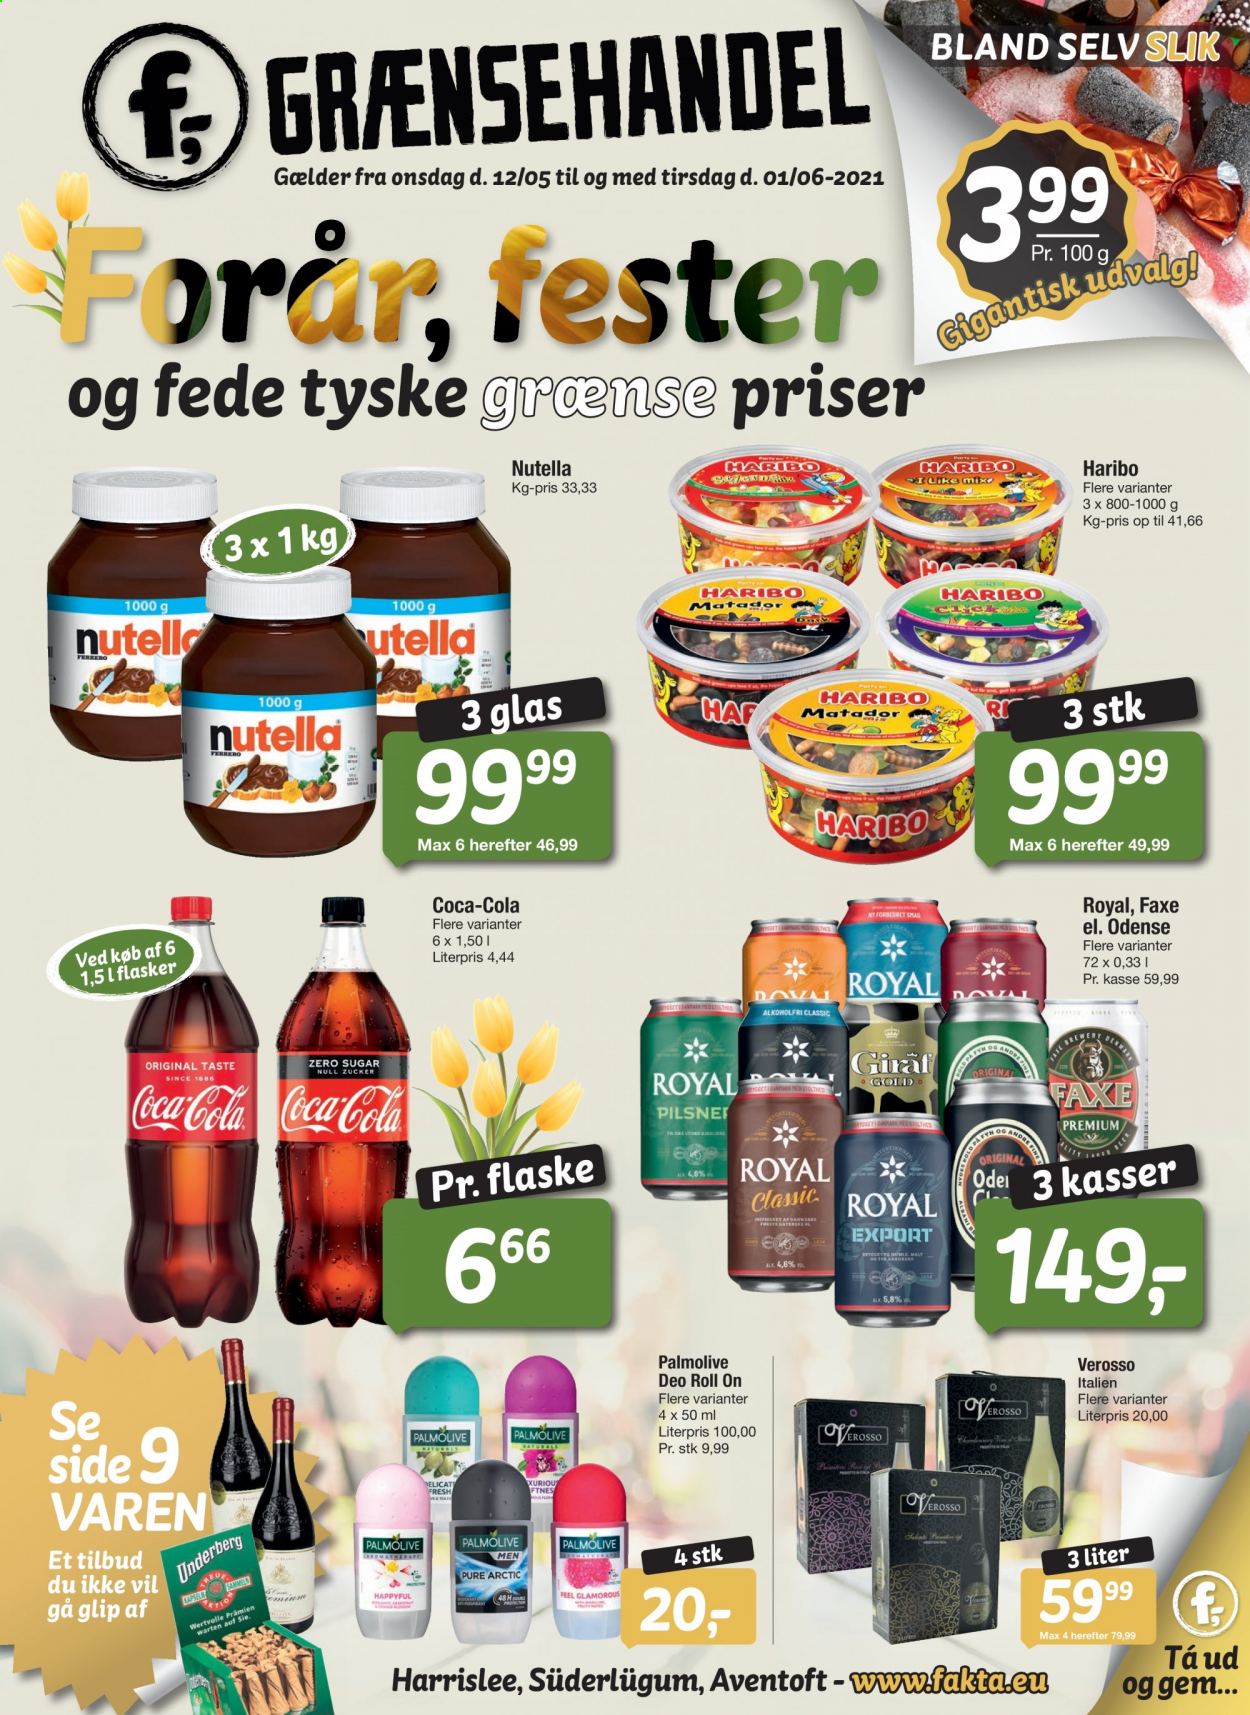 thumbnail - fakta Tyskland tilbud  - 12.5.2021 - 1.6.2021 - tilbudsprodukter - Ferrero Rocher, Nutella, Coca-Cola, Palmolive. Side 1.